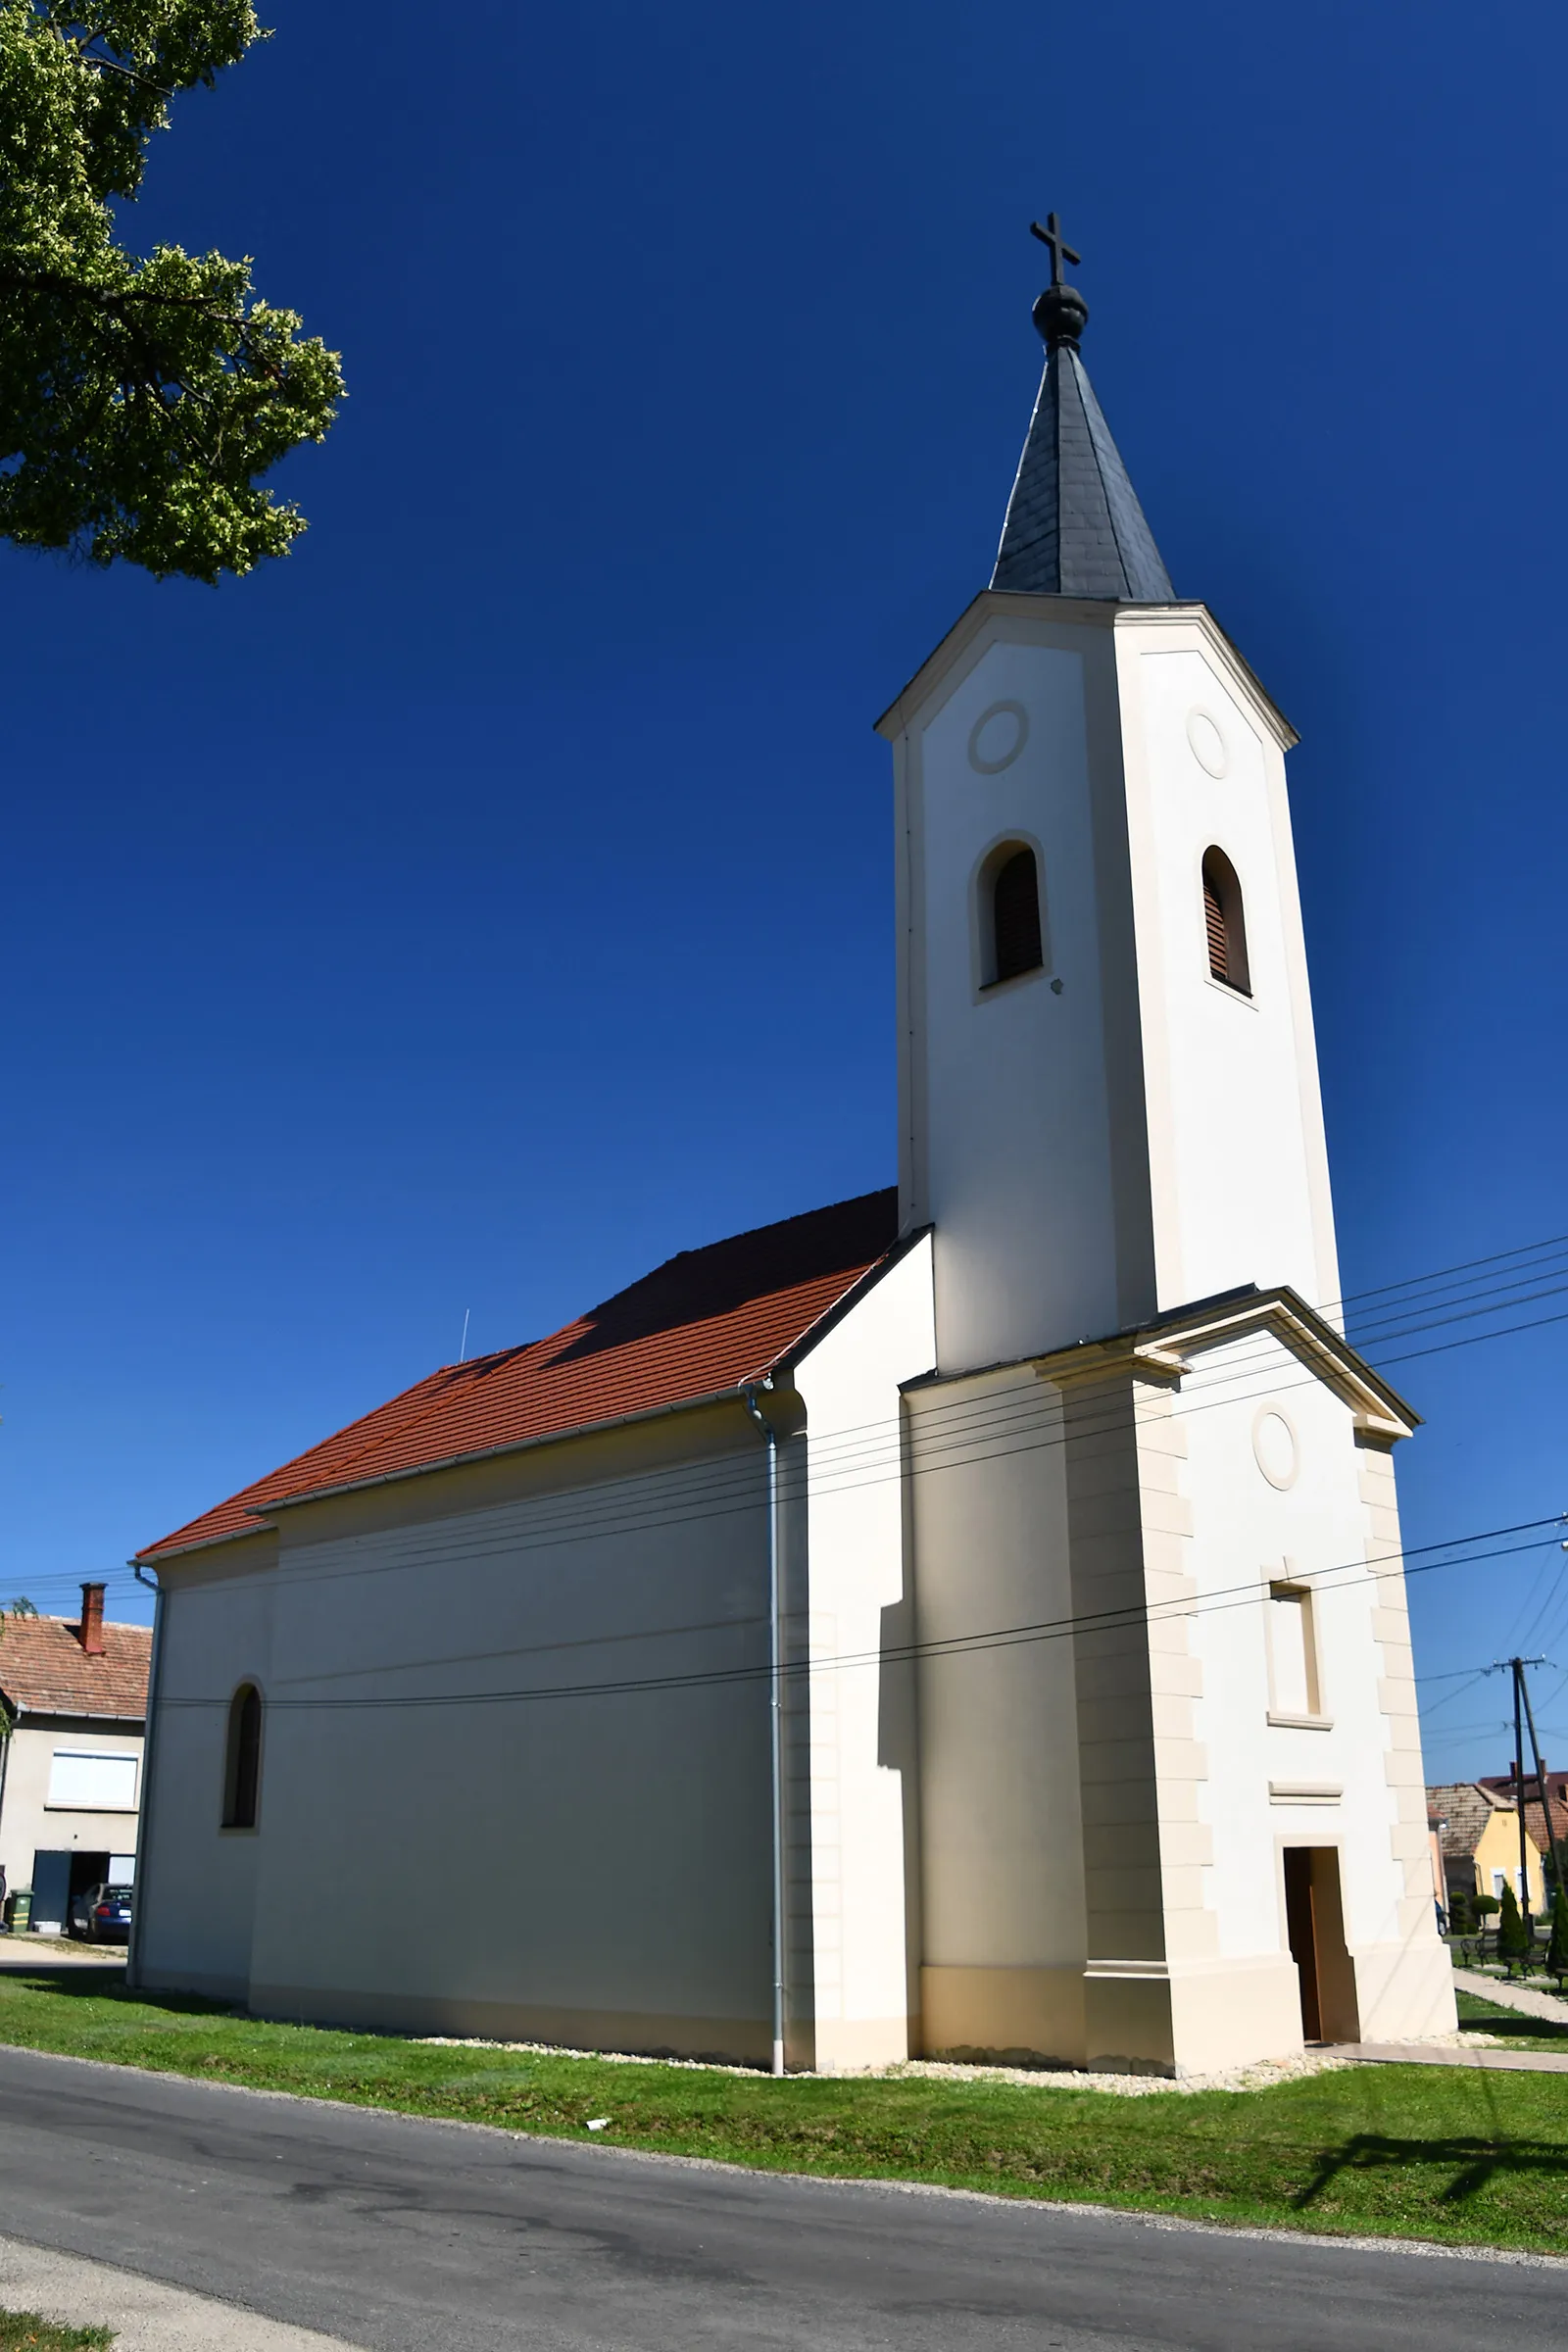 Photo showing: Roman Catholic church in Kemenessömjén, Hungary